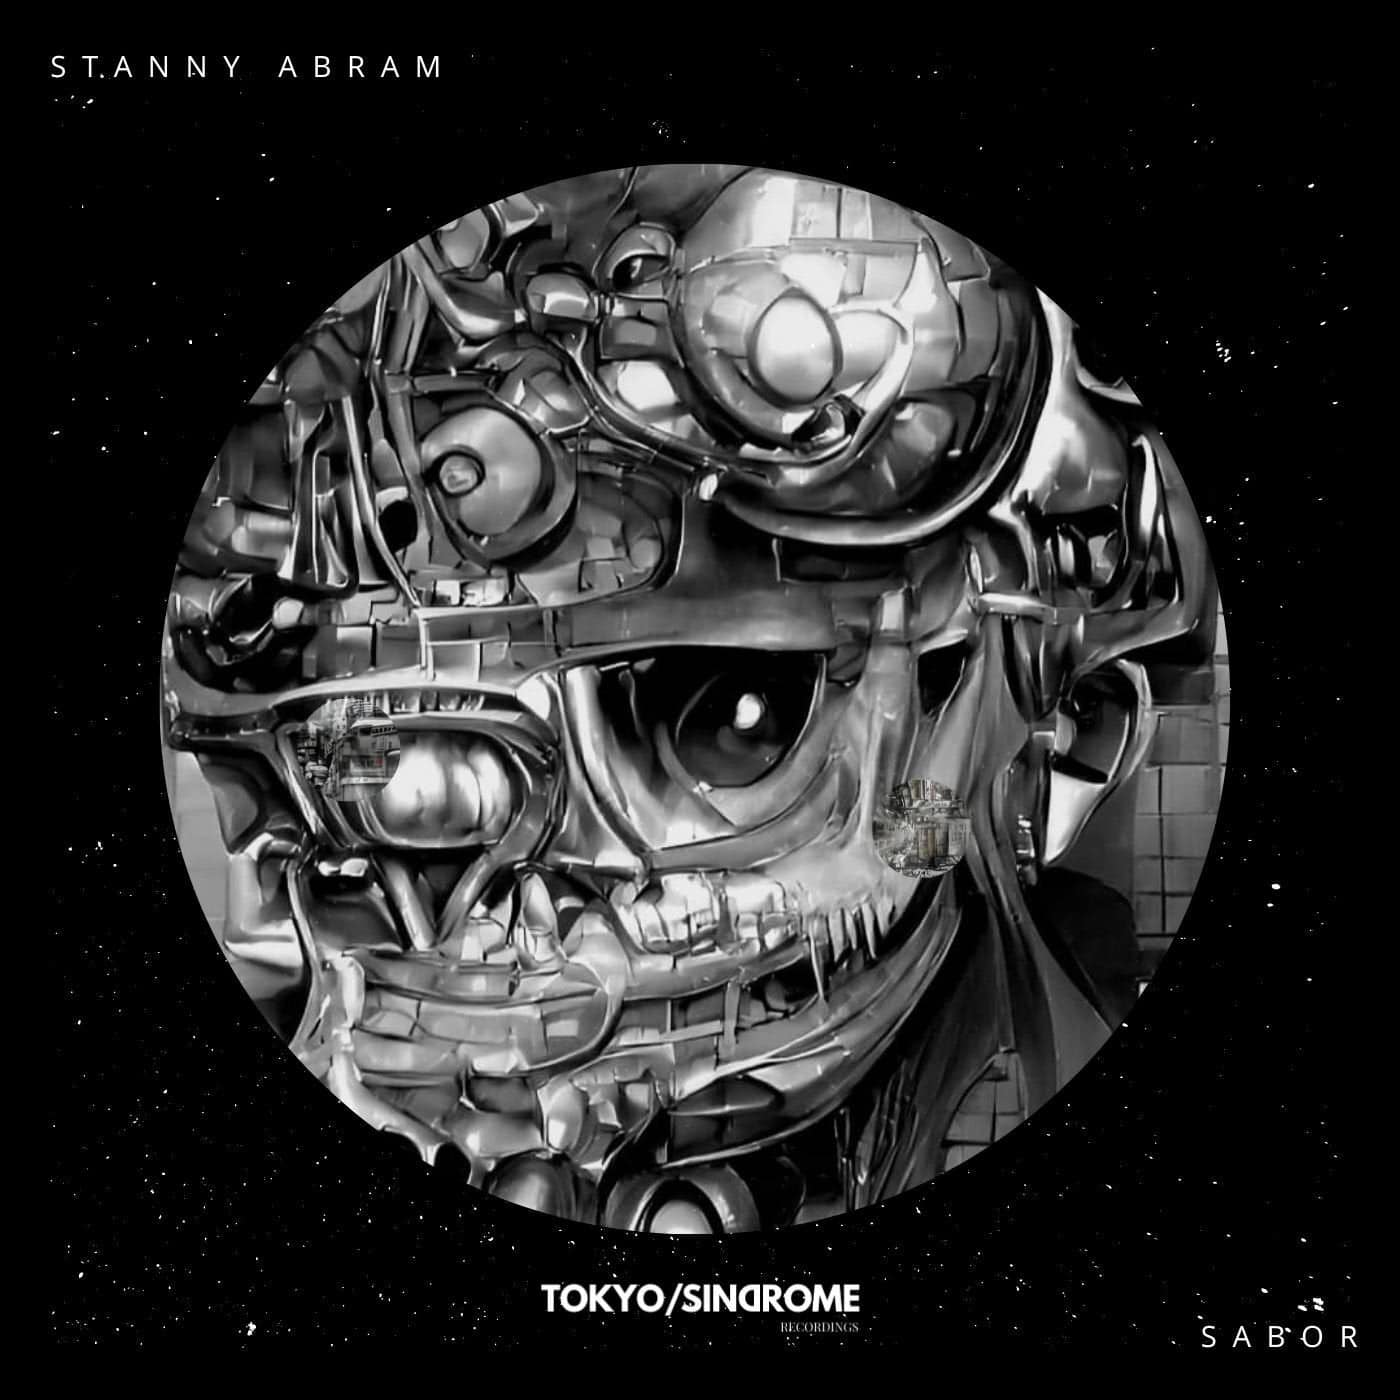 Download Stanny Abram - Sabor on Electrobuzz